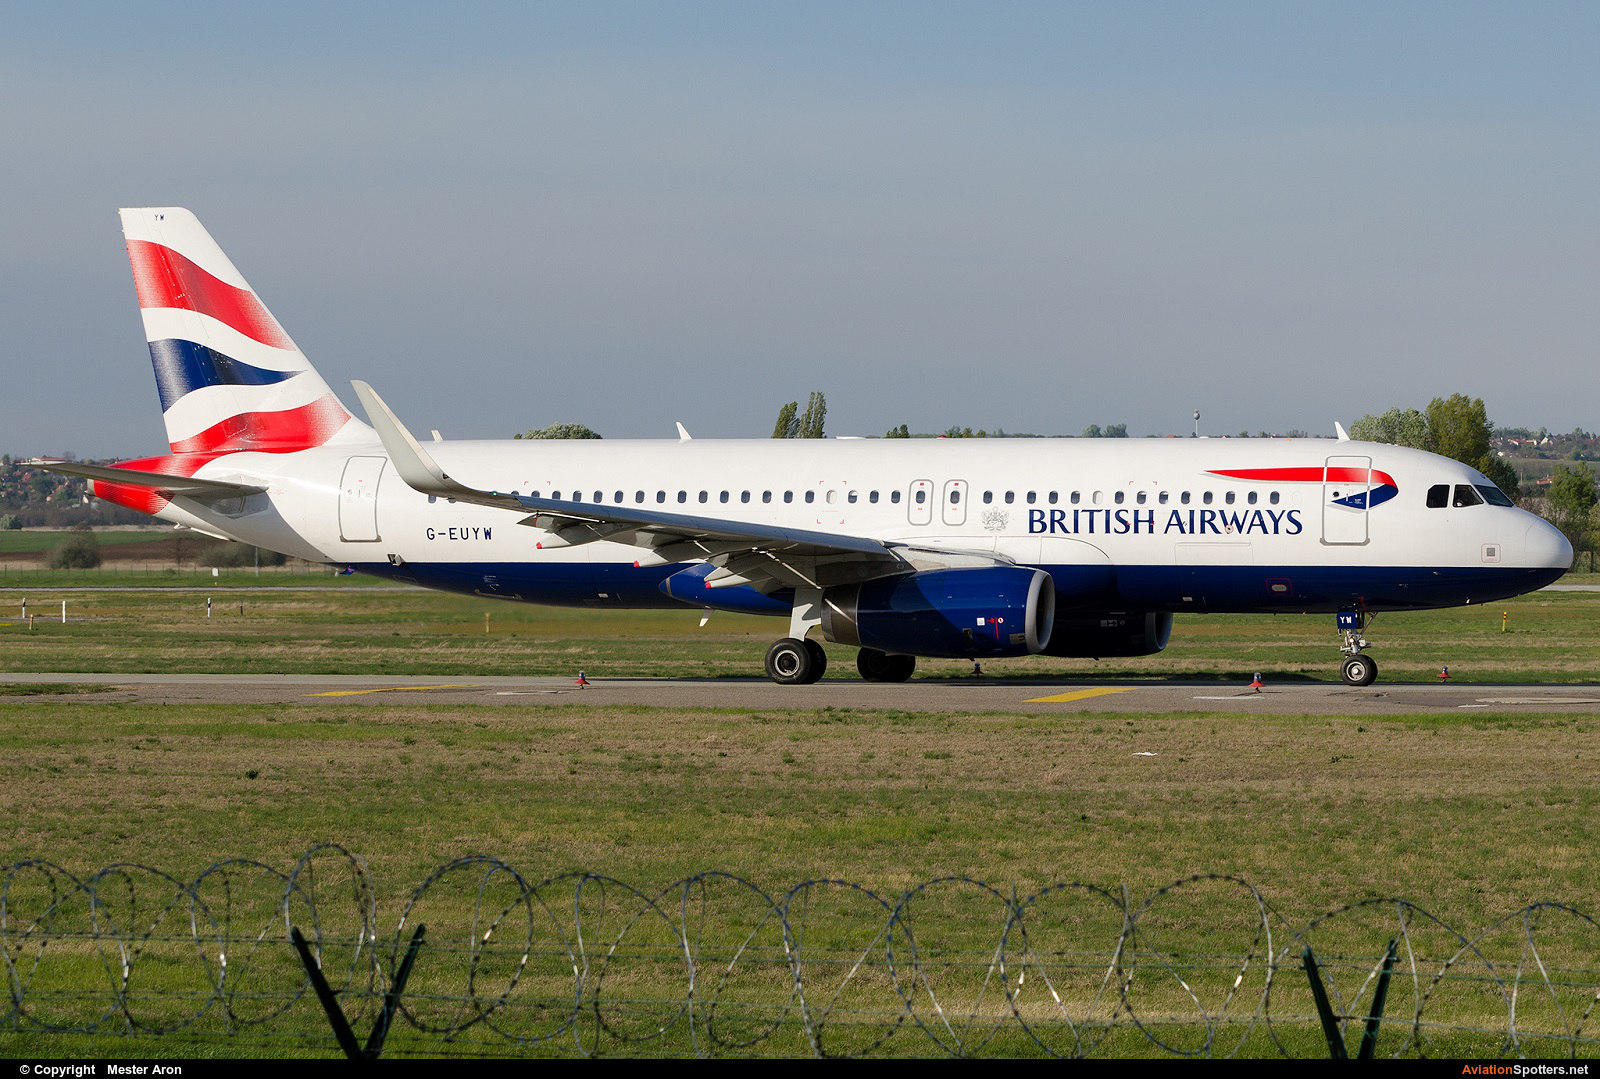 British Airways  -  A320-232  (G-EUYW) By Mester Aron (MesterAron)